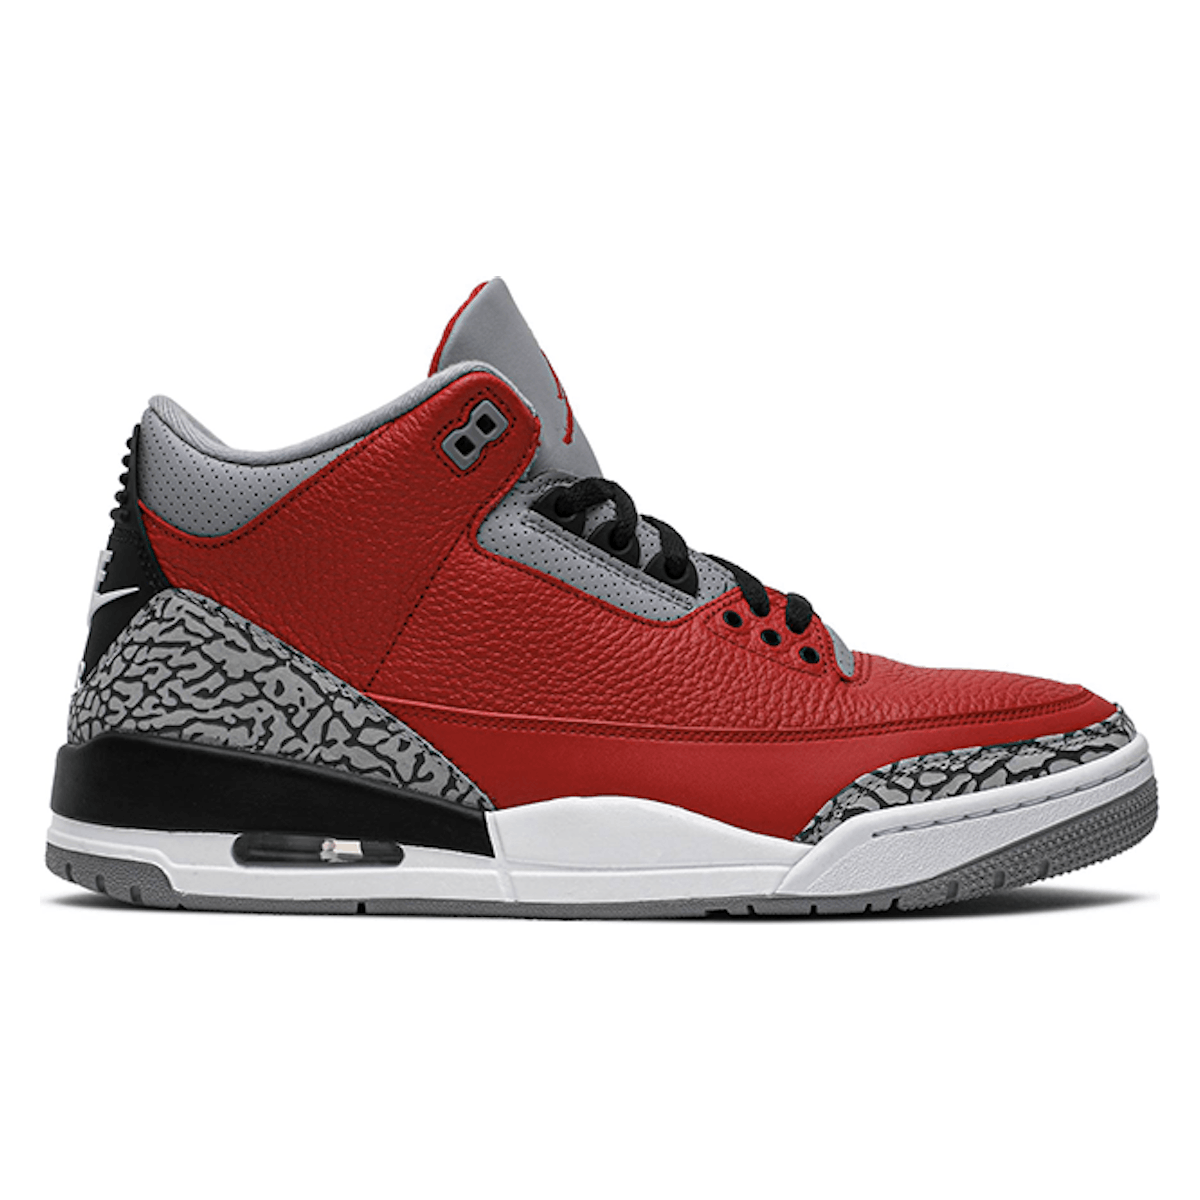 Air Jordan 3 Retro SE Unite "Fire Red"